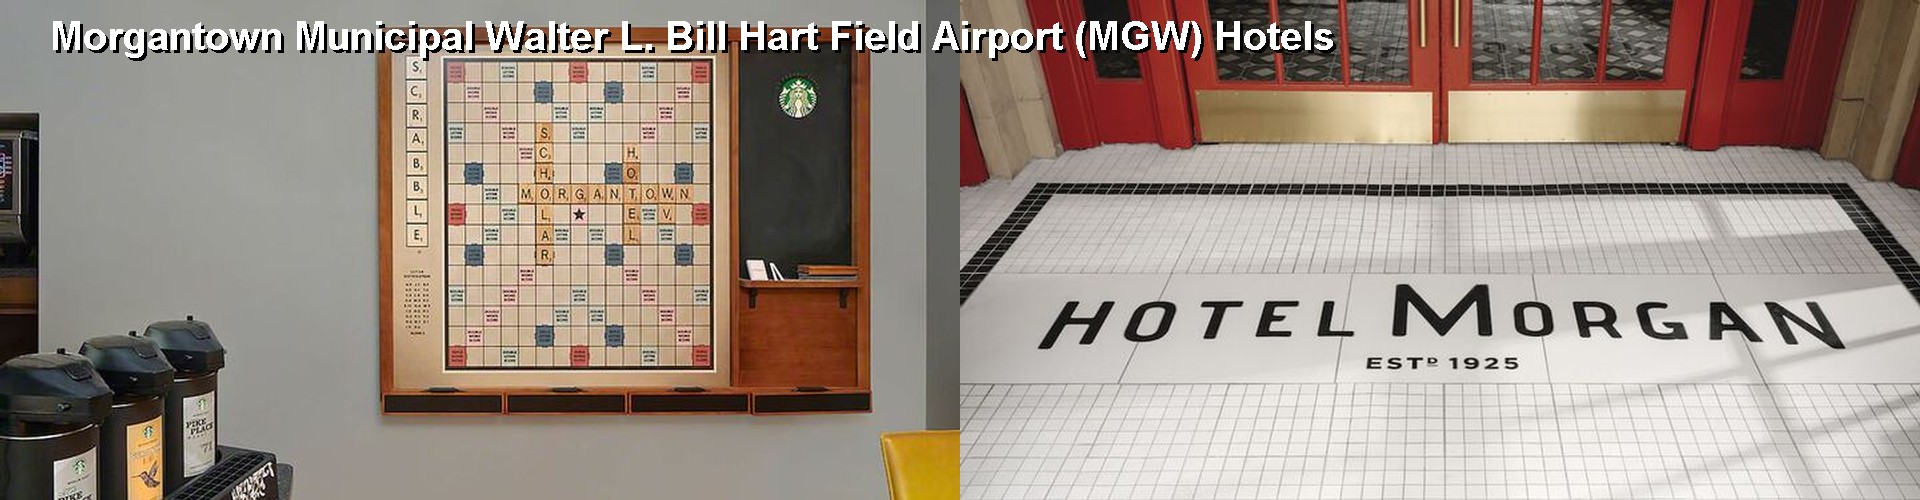 5 Best Hotels near Morgantown Municipal Walter L. Bill Hart Field Airport (MGW)